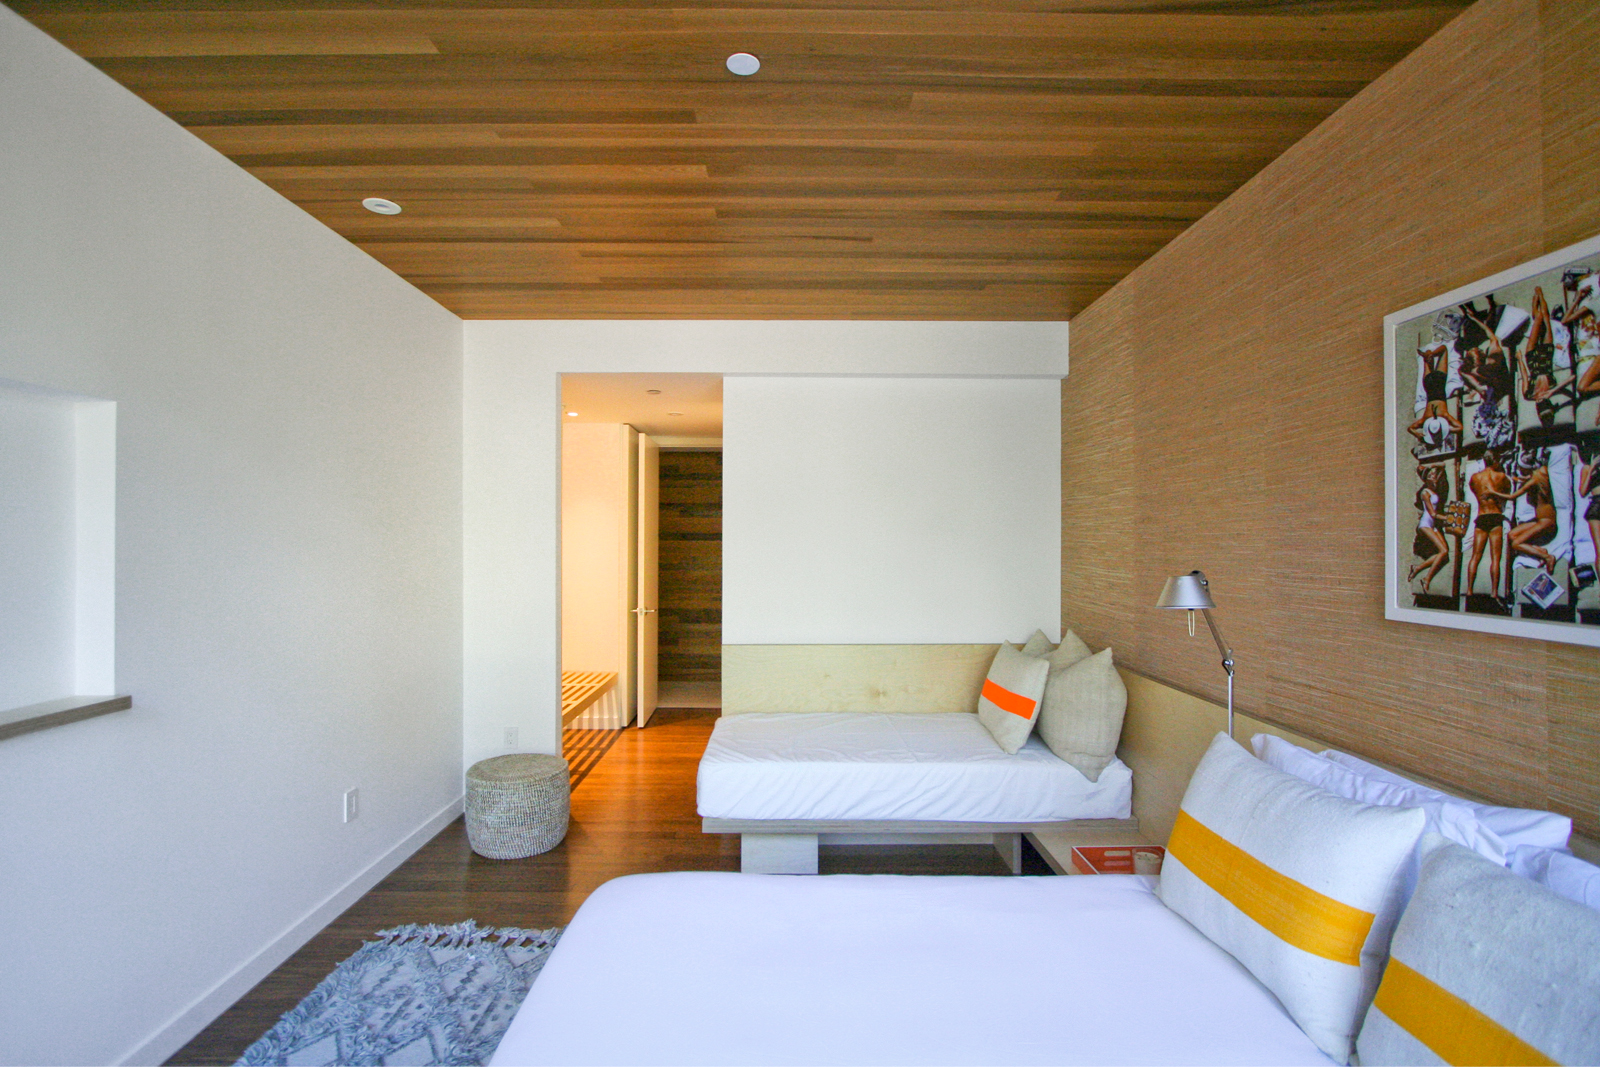 res4-resolution-4-architecture-modern-modular-house-prefab-amagansett-addition-bedroom-perspective-02.jpg